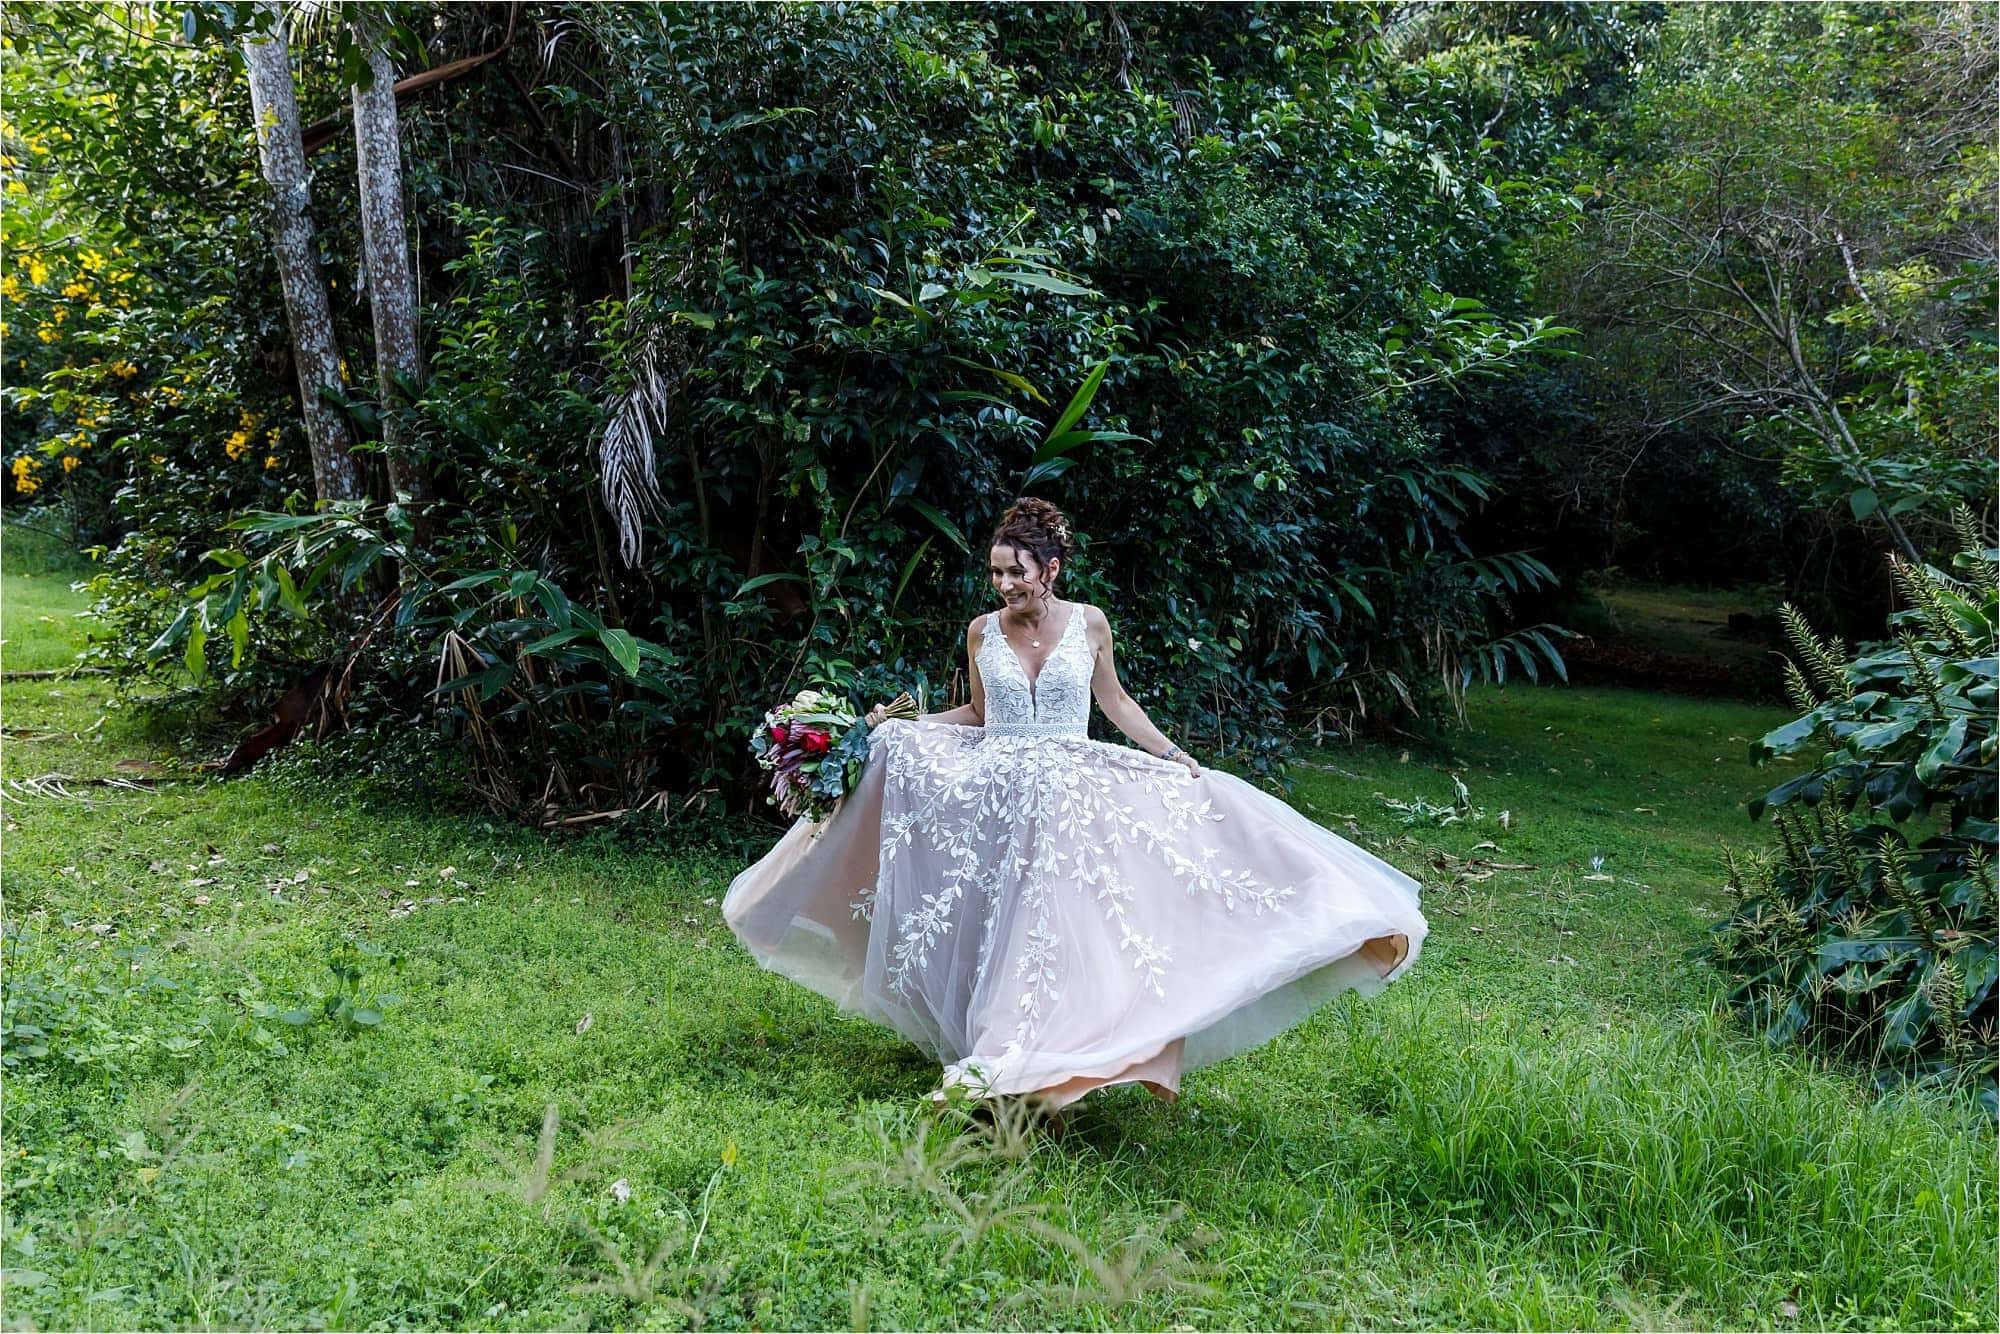 Bride twirling wedding dress.